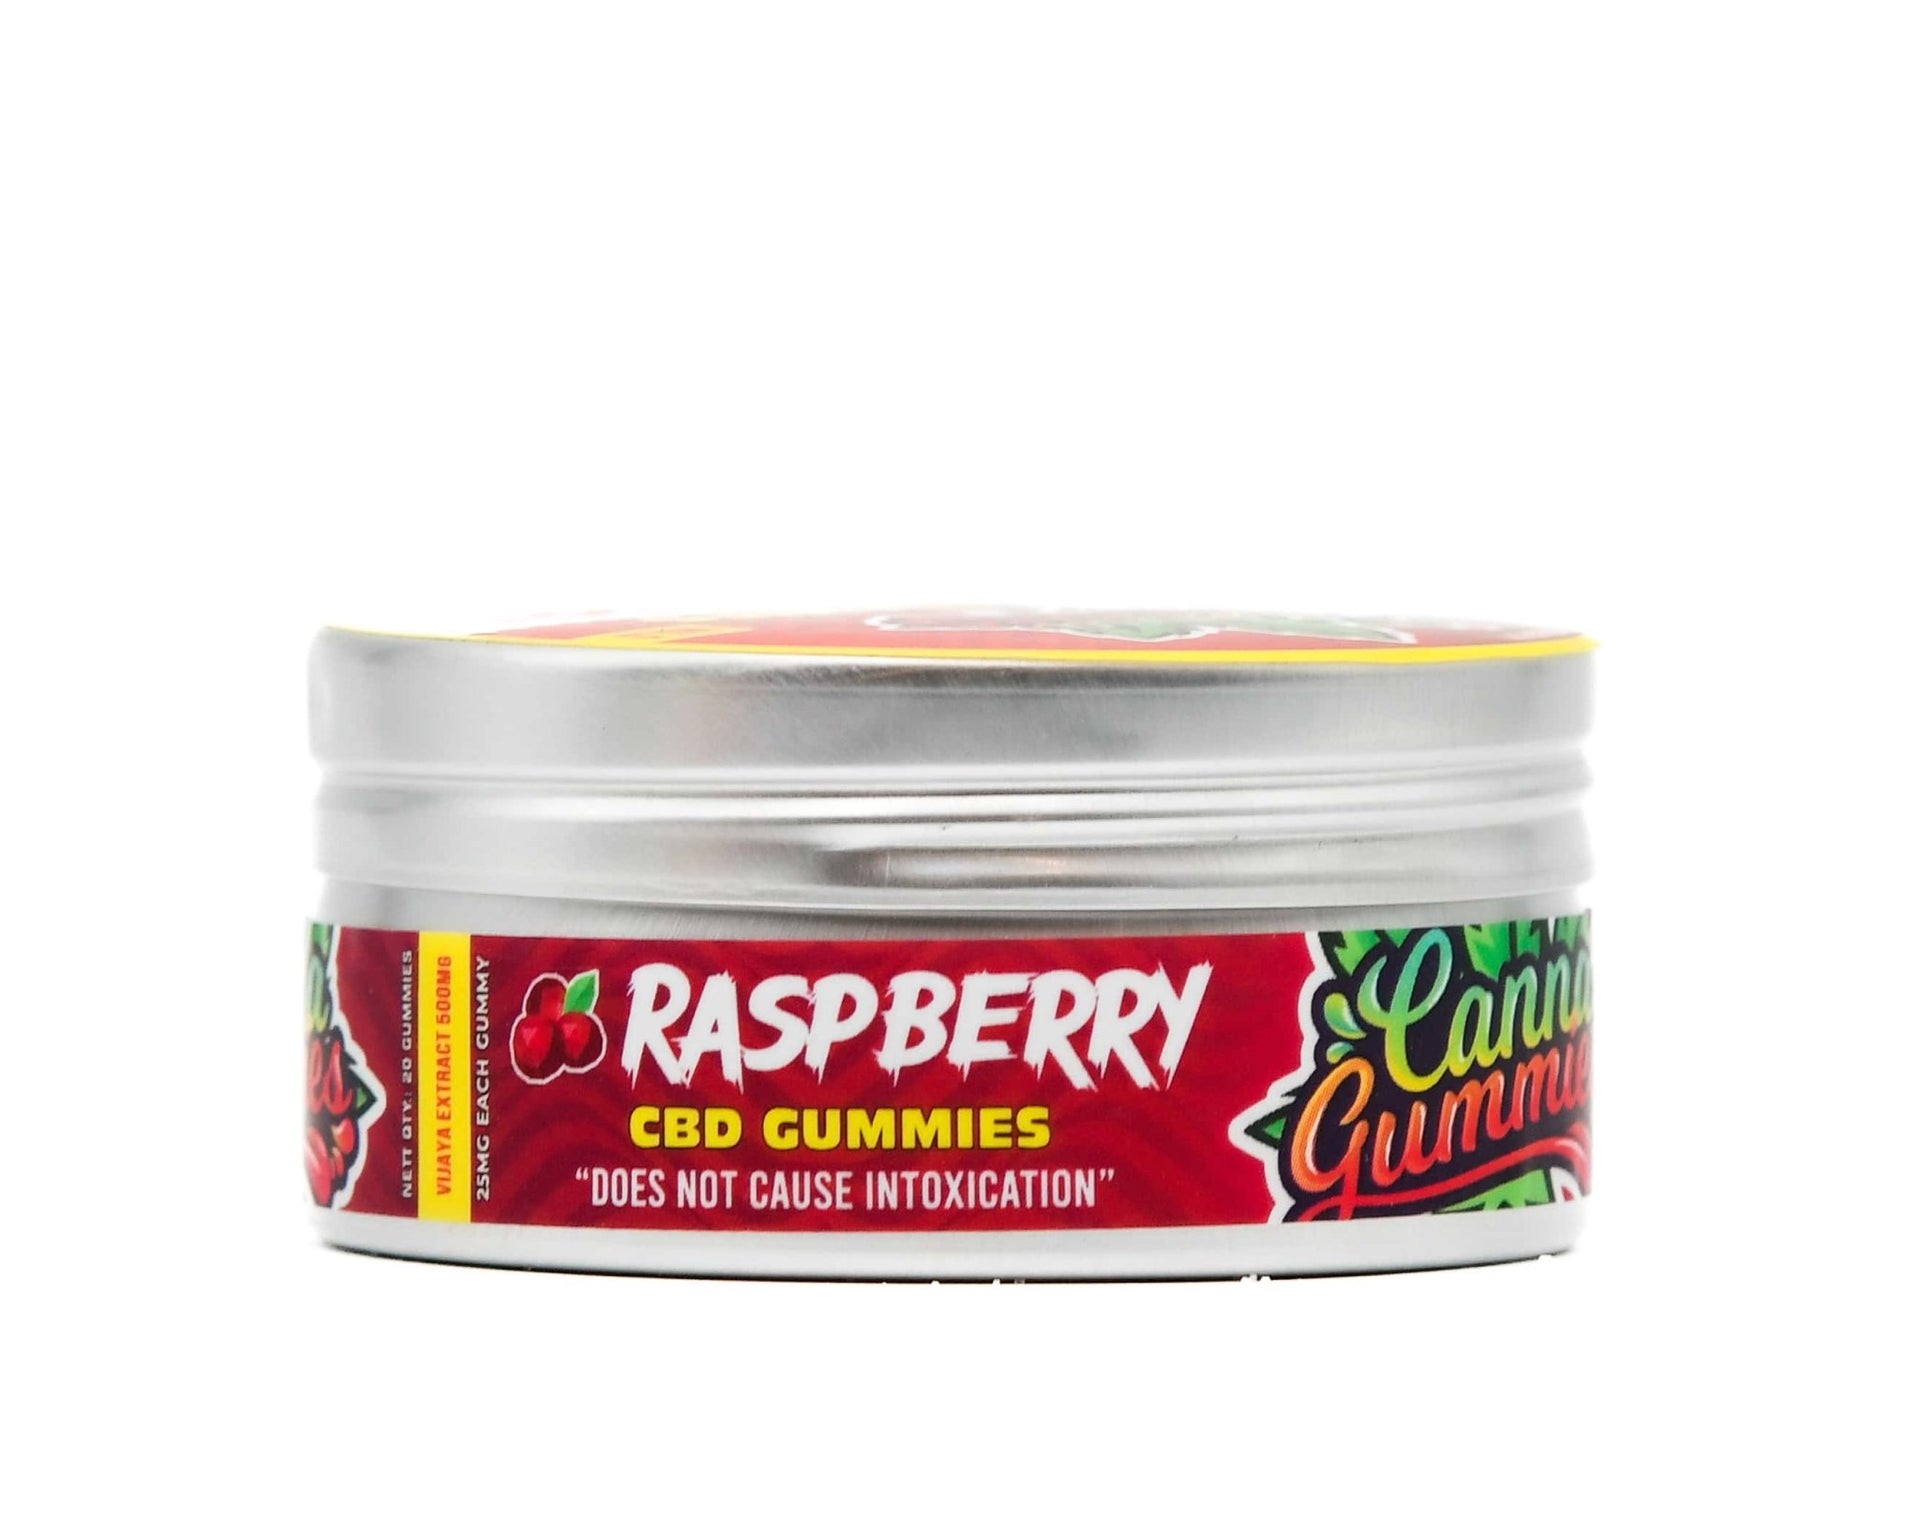 Canna Gummies – CBD Gummies 1:0 - Raspberry - CBD Store India